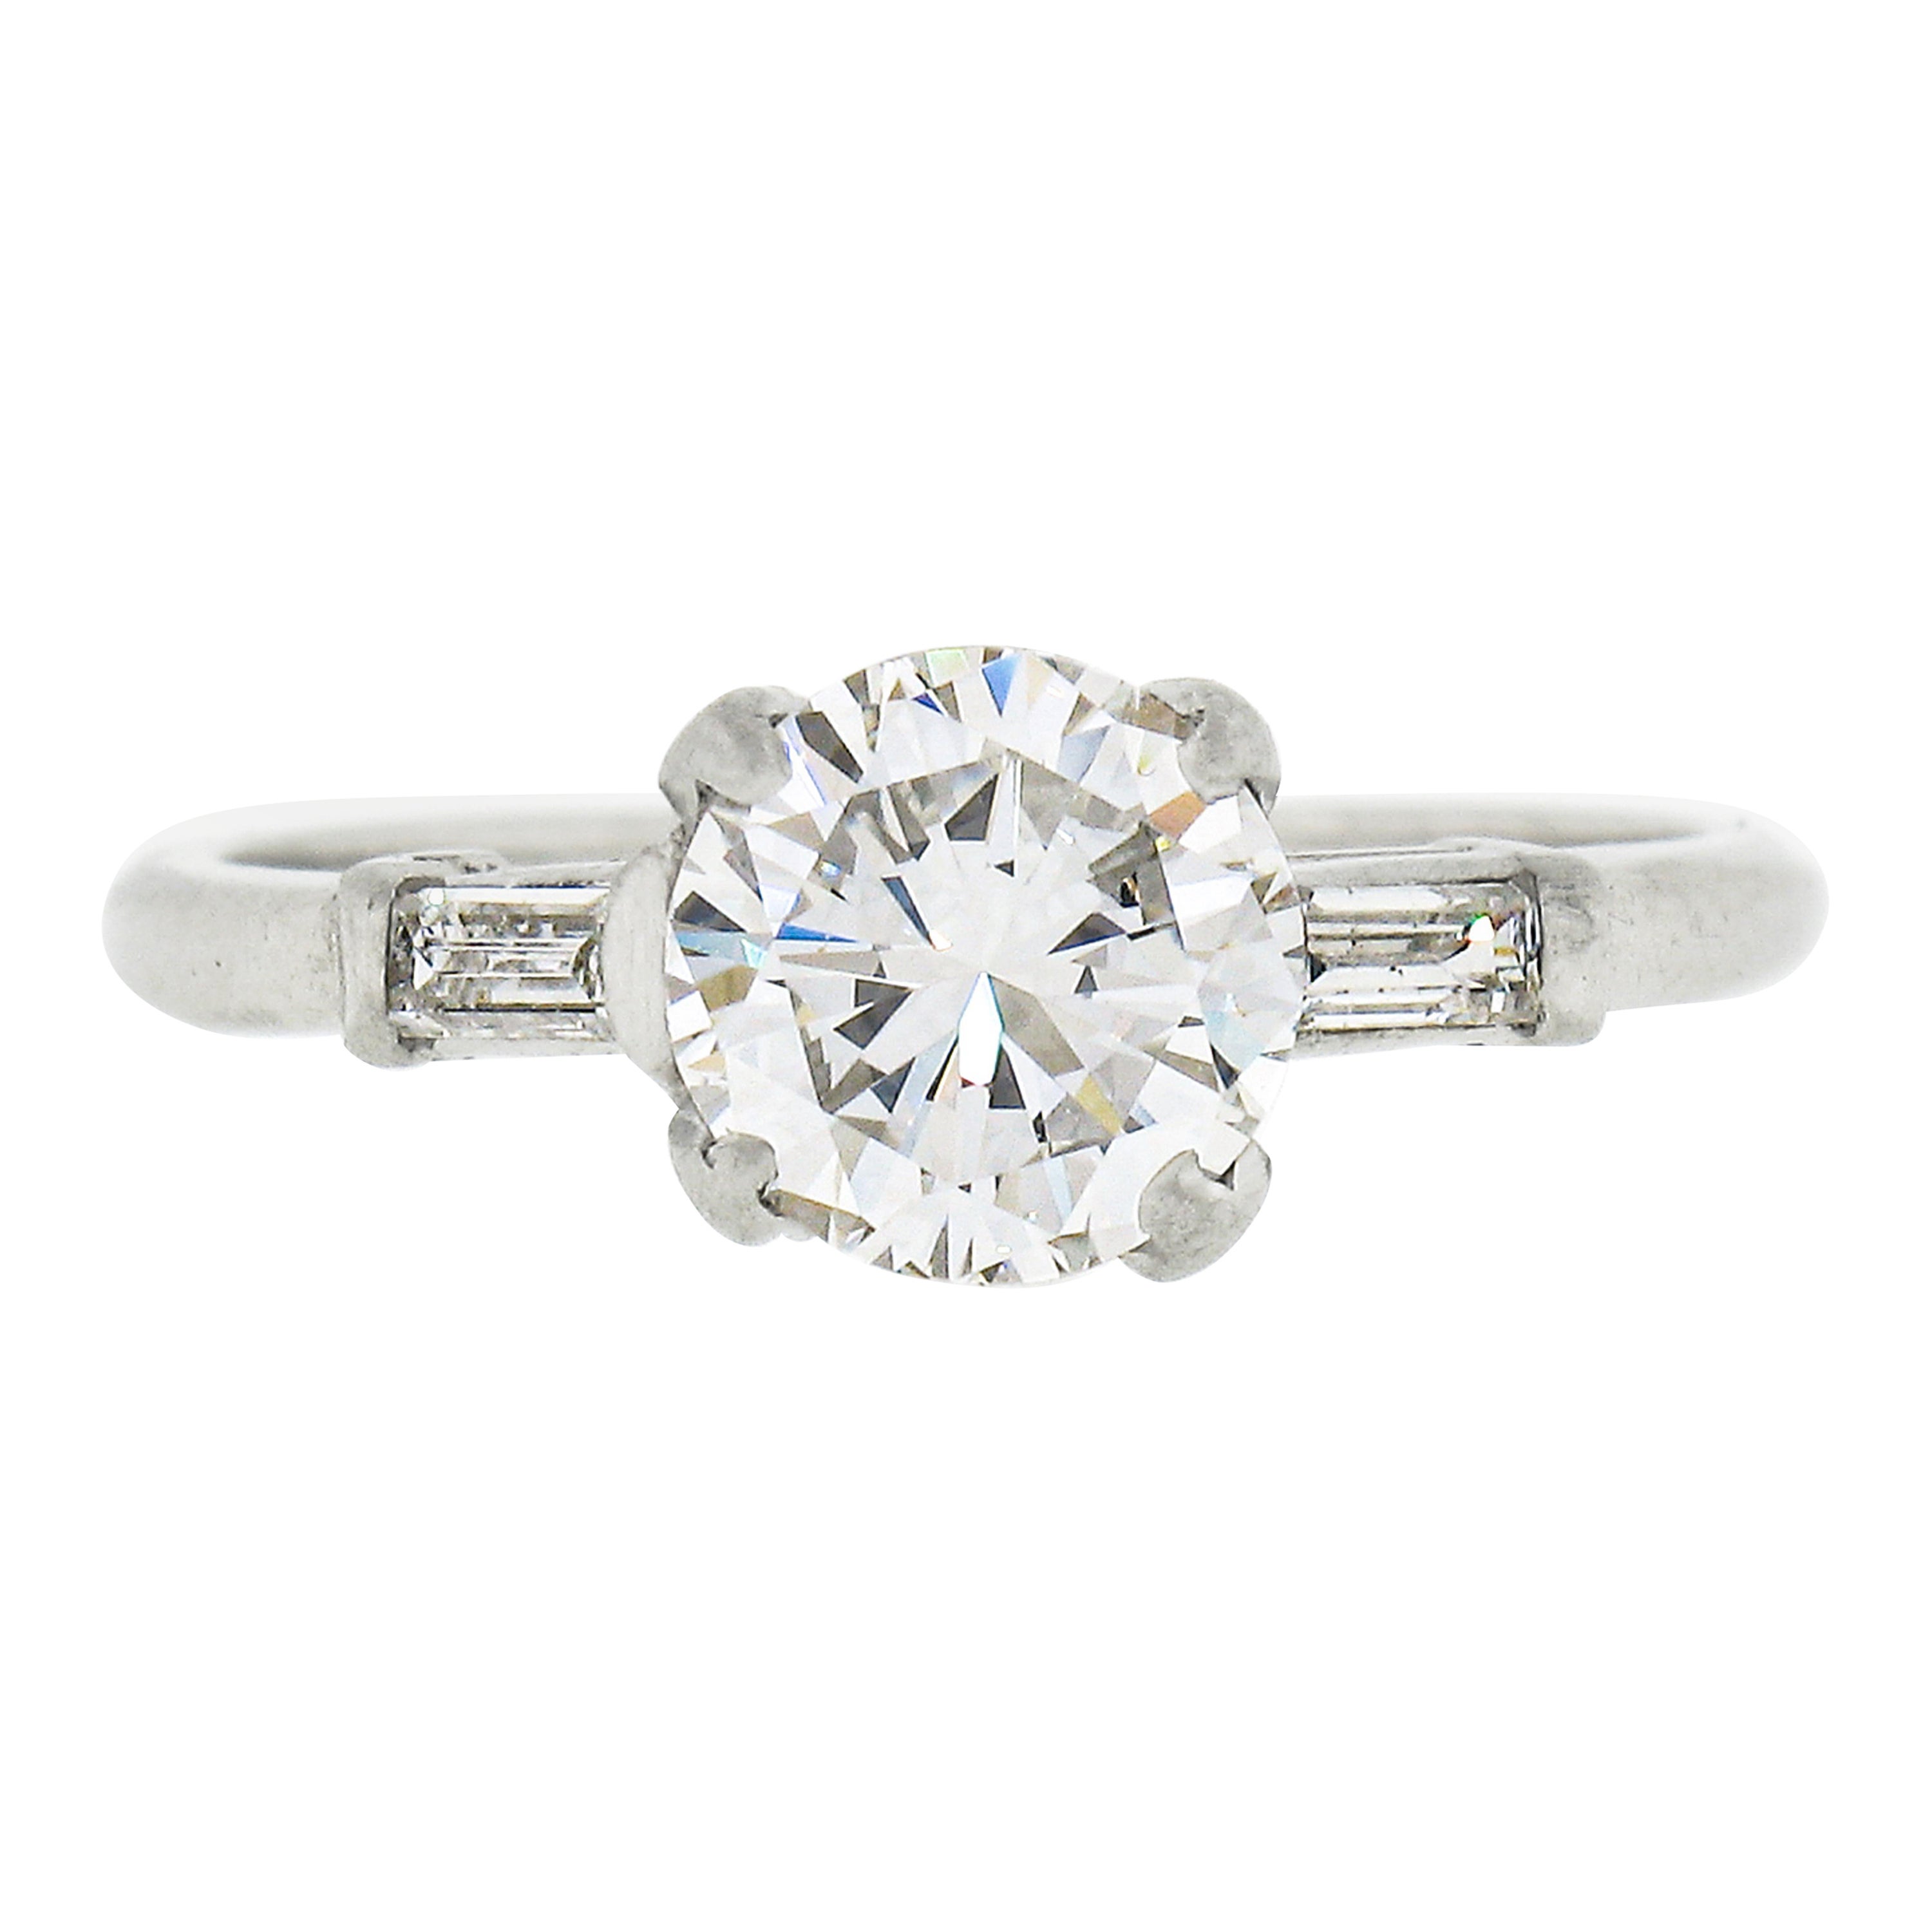 Vintage Platinum 1.14ctw GIA Round Diamond w/ Baguette Accent Engagement Ring